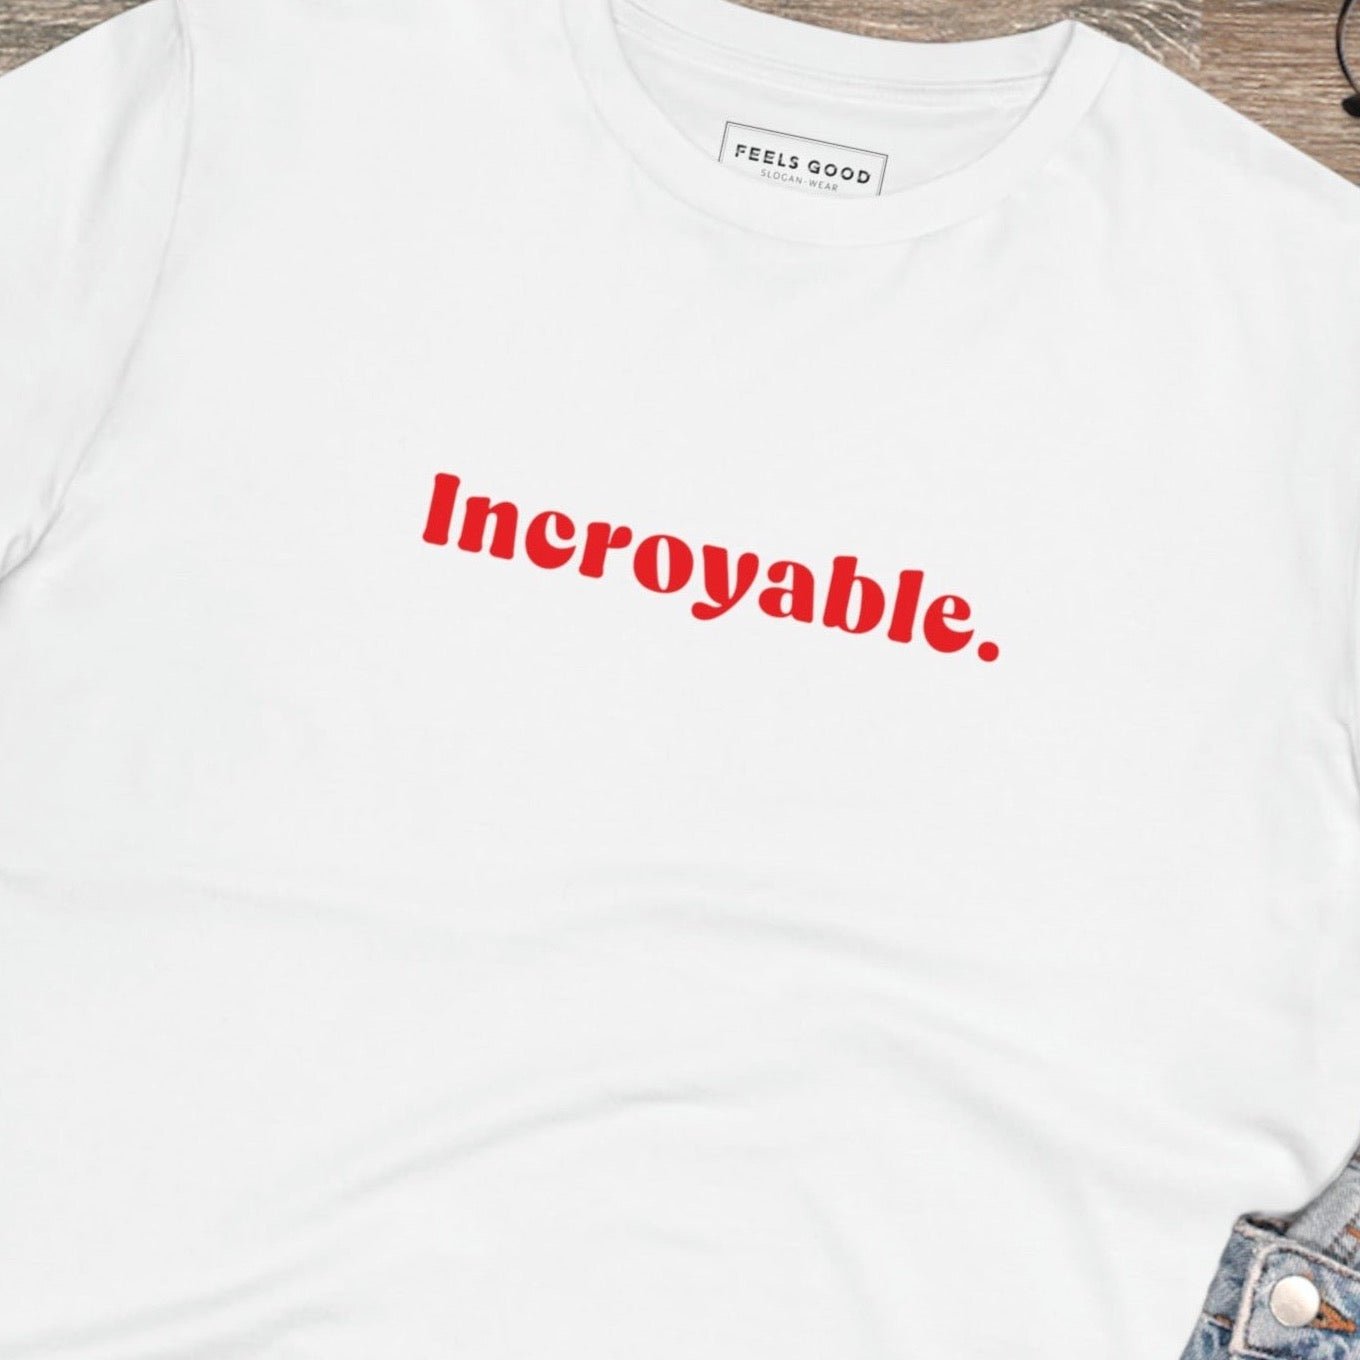 Francophile 'Incredible' Organic Cotton T-shirt - Francophile Tshirt